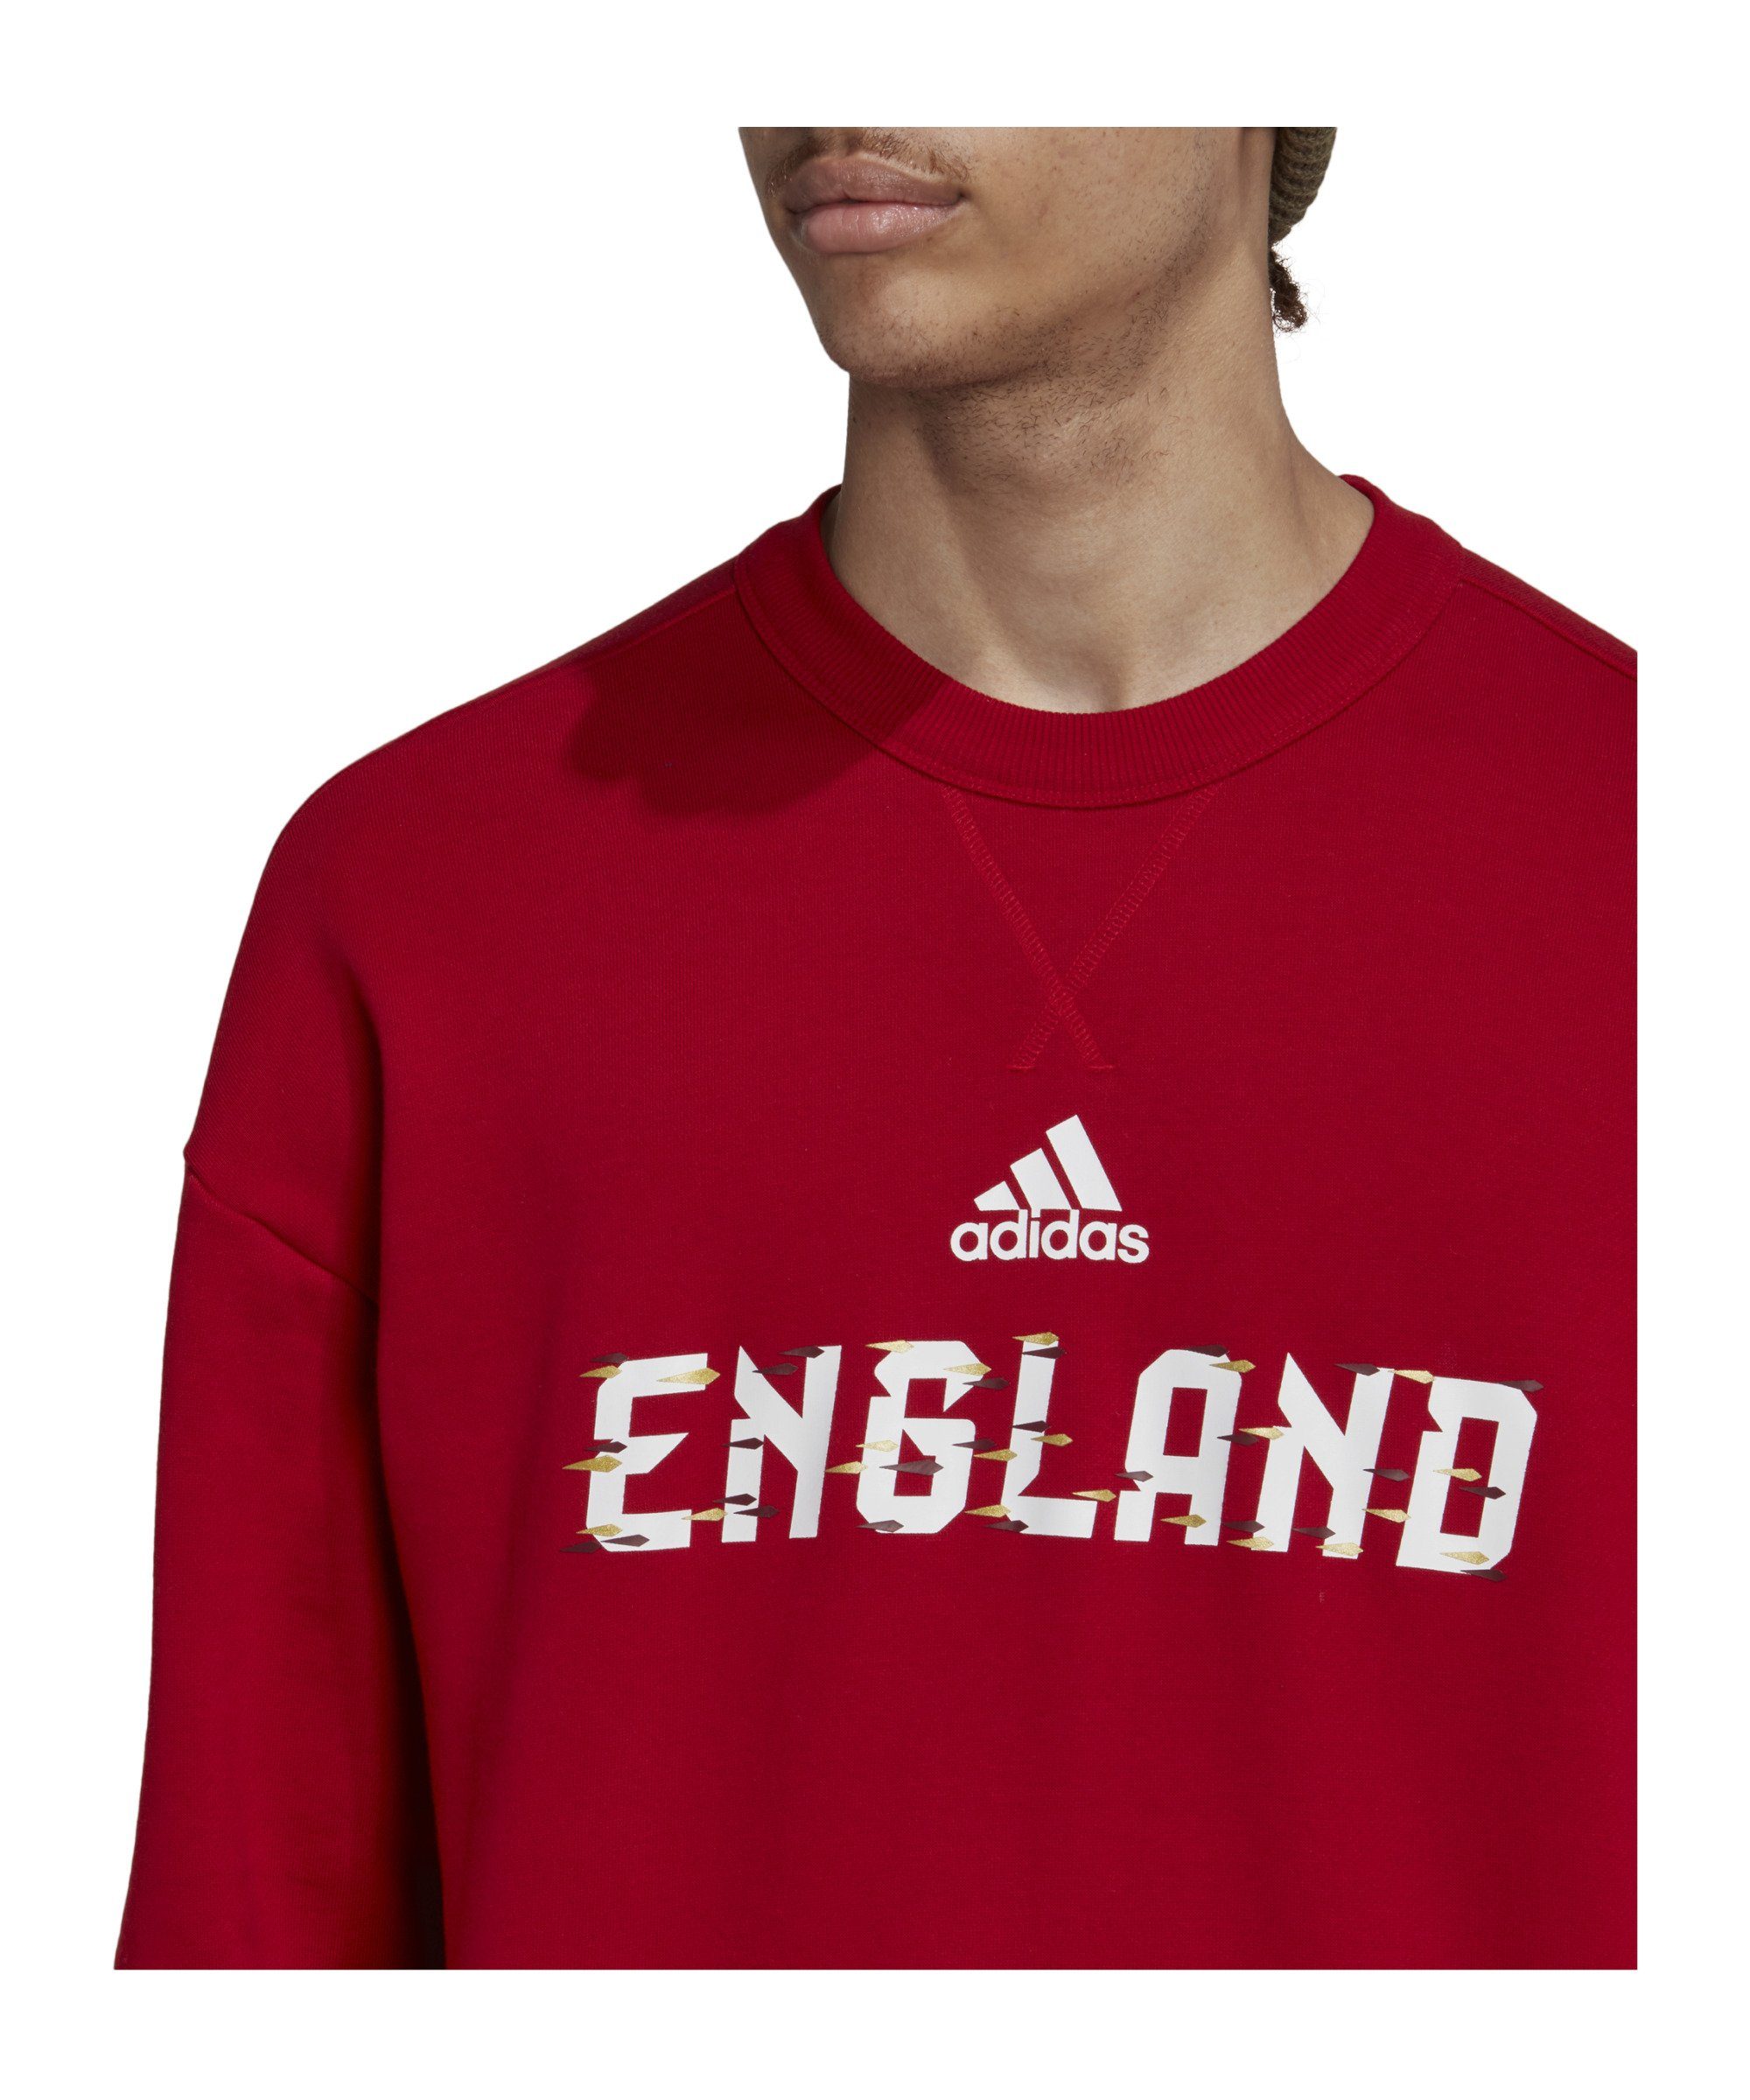 adidas Sweatshirt England Sweatshirt Performance